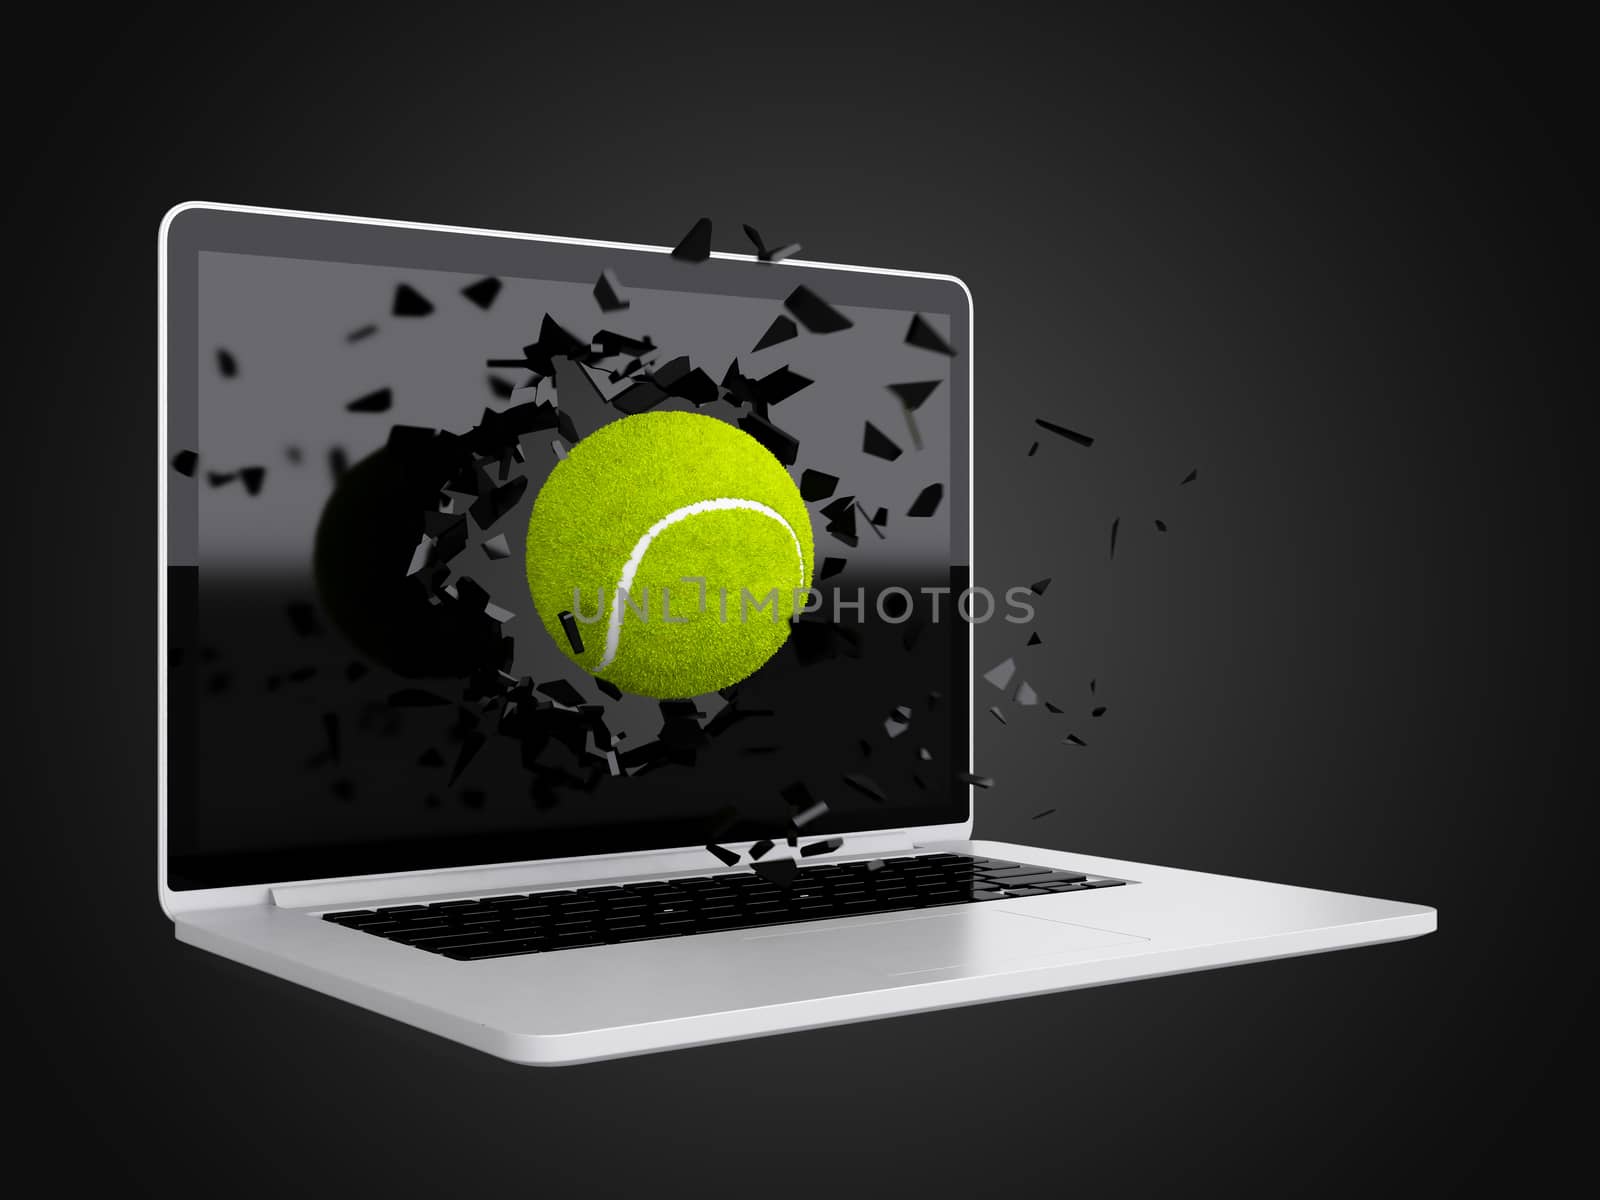 tennis ball destroy laptop by teerawit